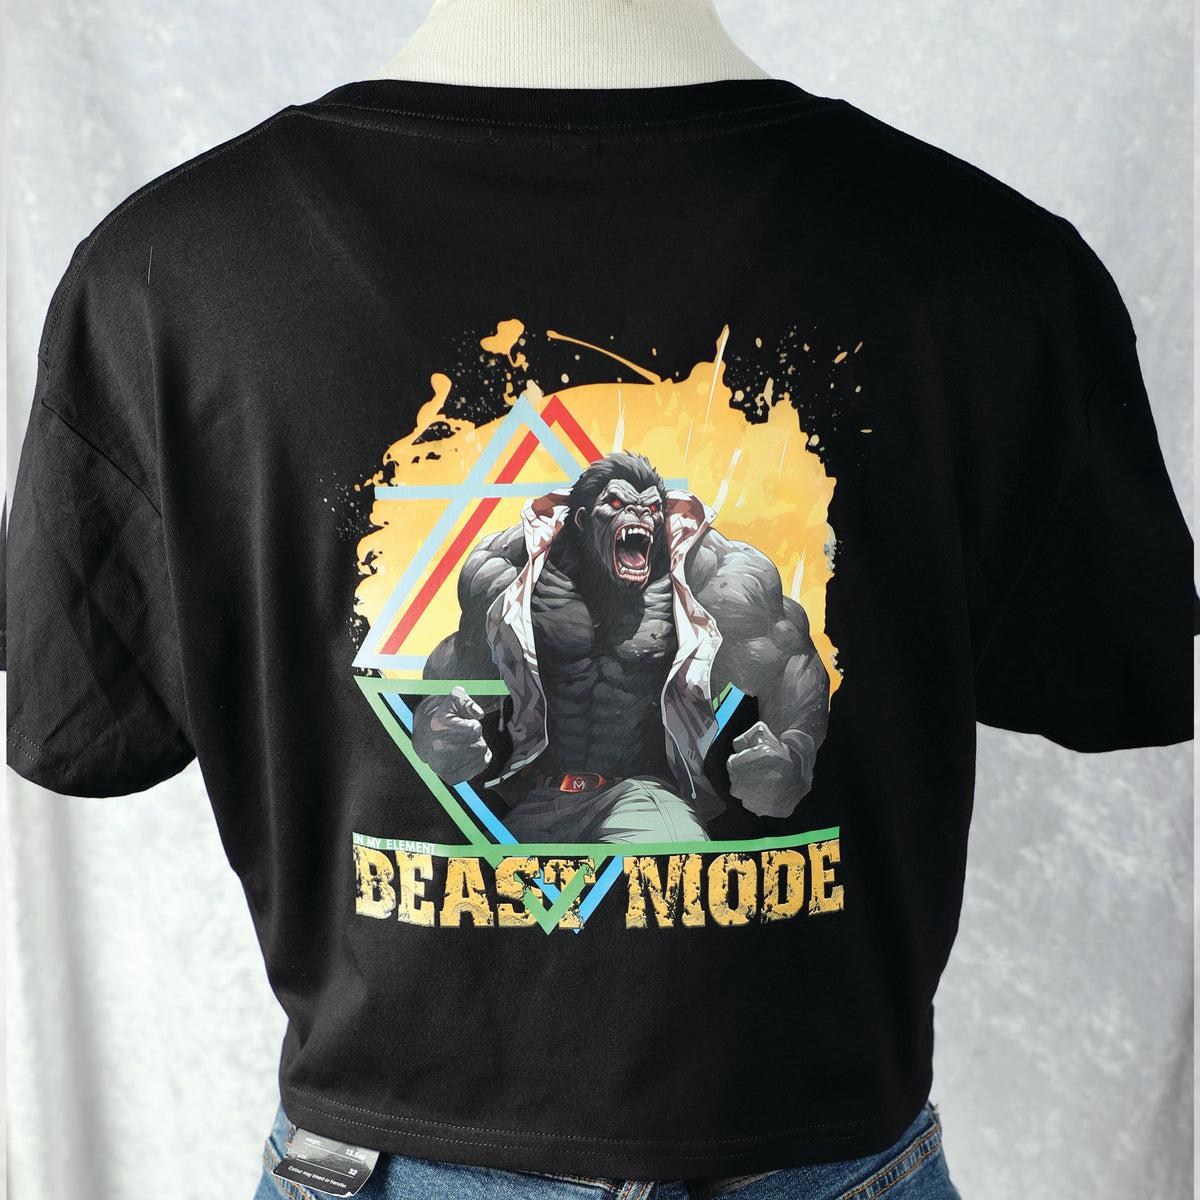 Beast Mode Ladies Crop T-shirt